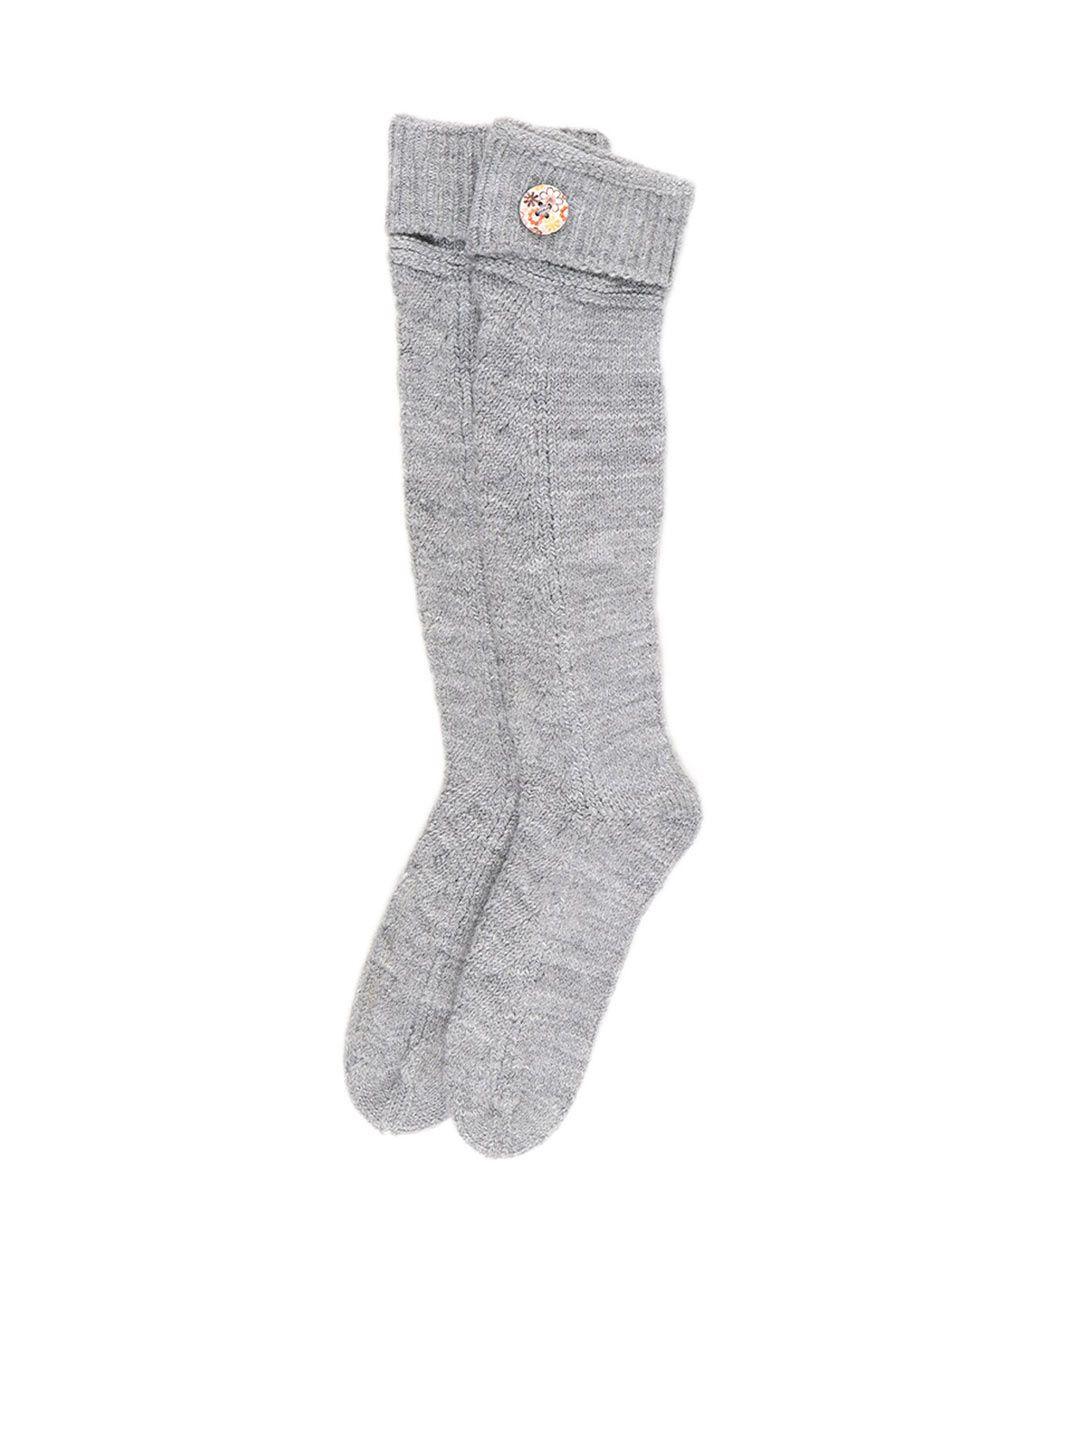 bharatasya girls grey solid knee length socks